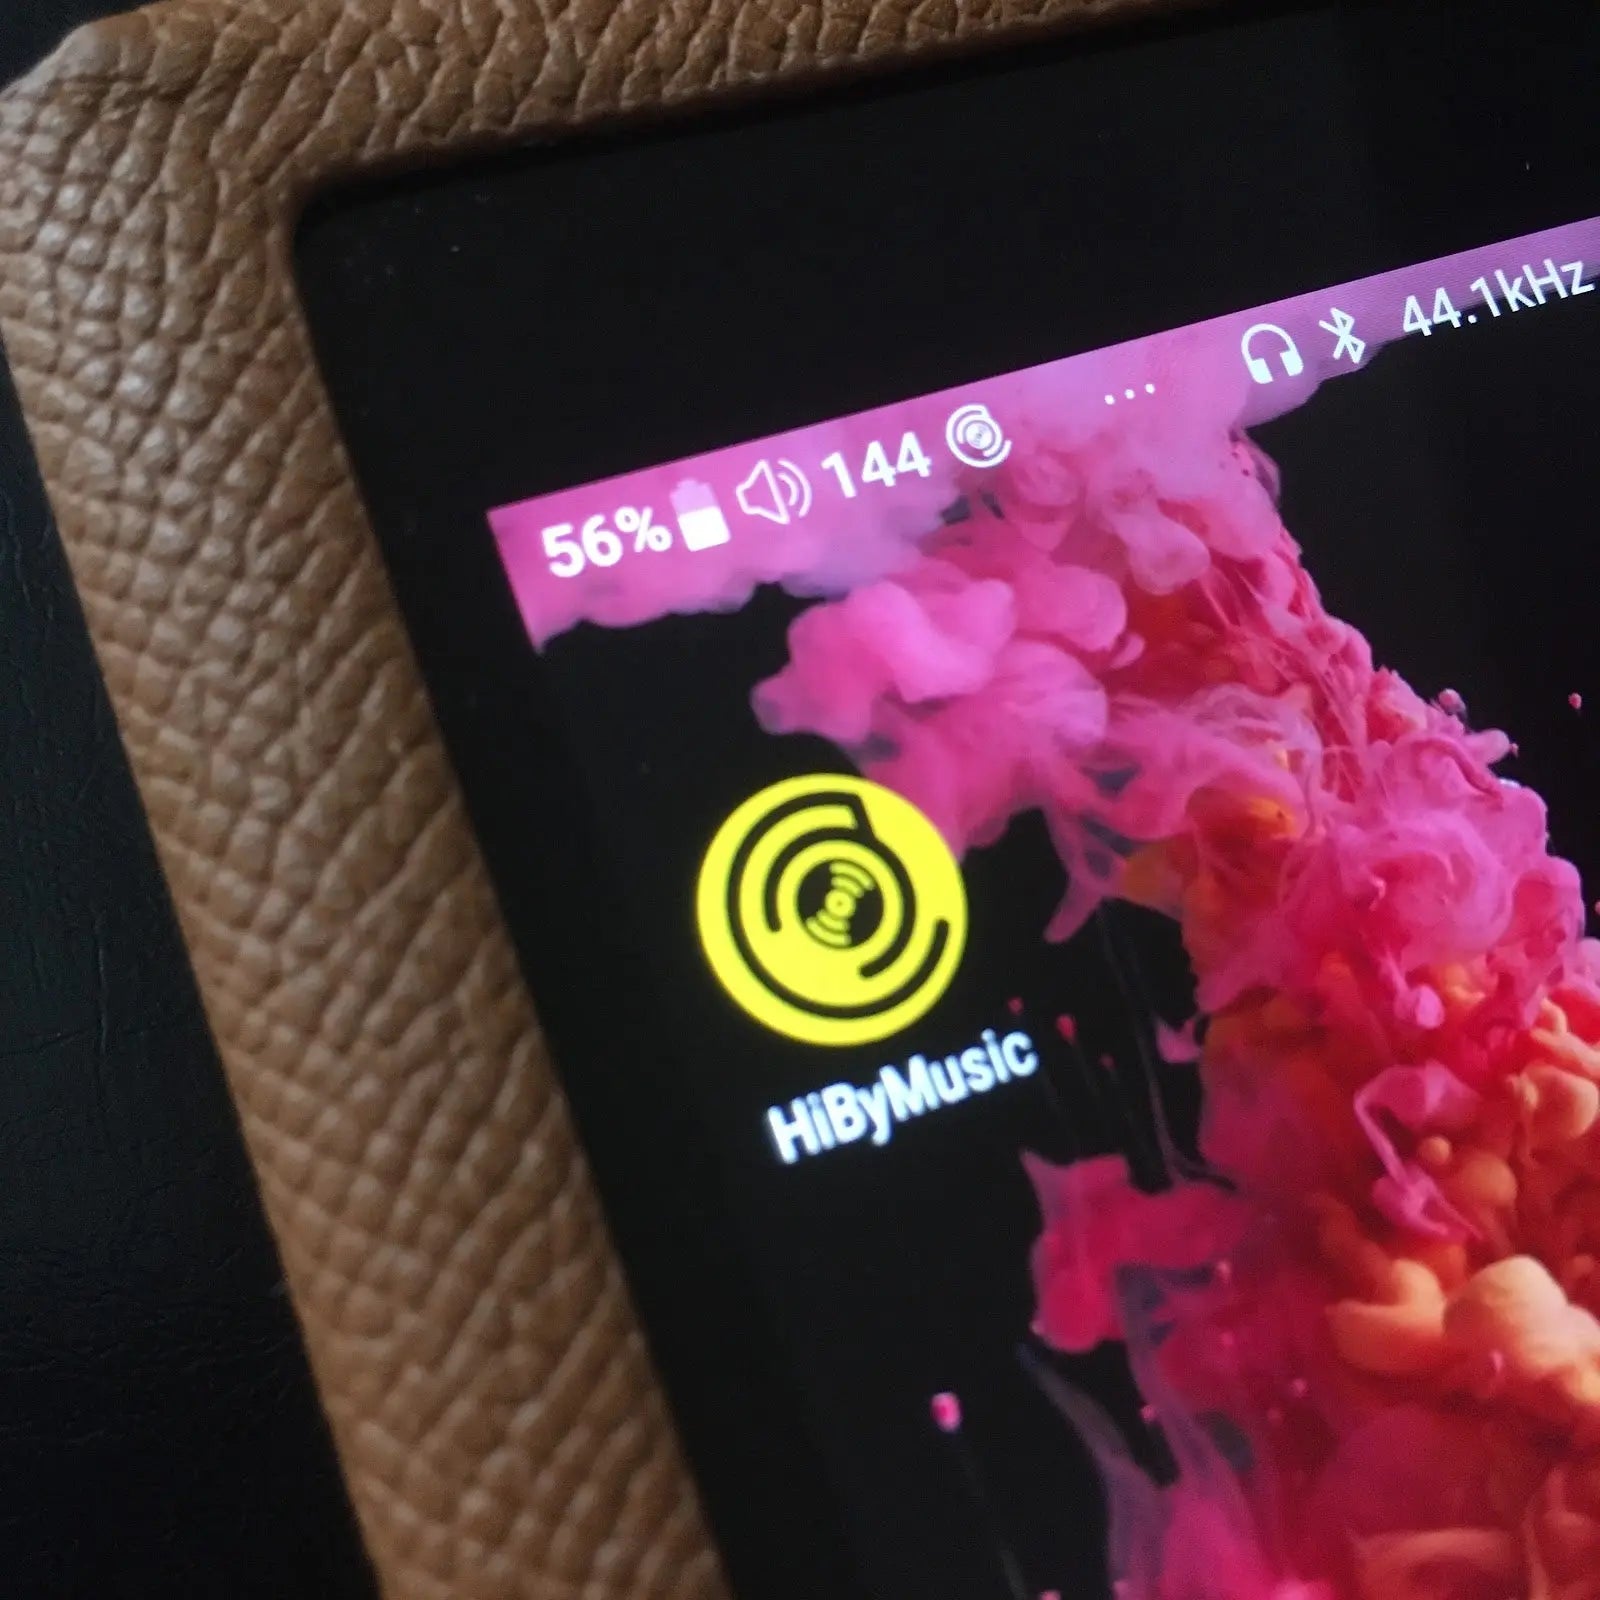 HiBy Music App (iOS) 1.0.0 is Released